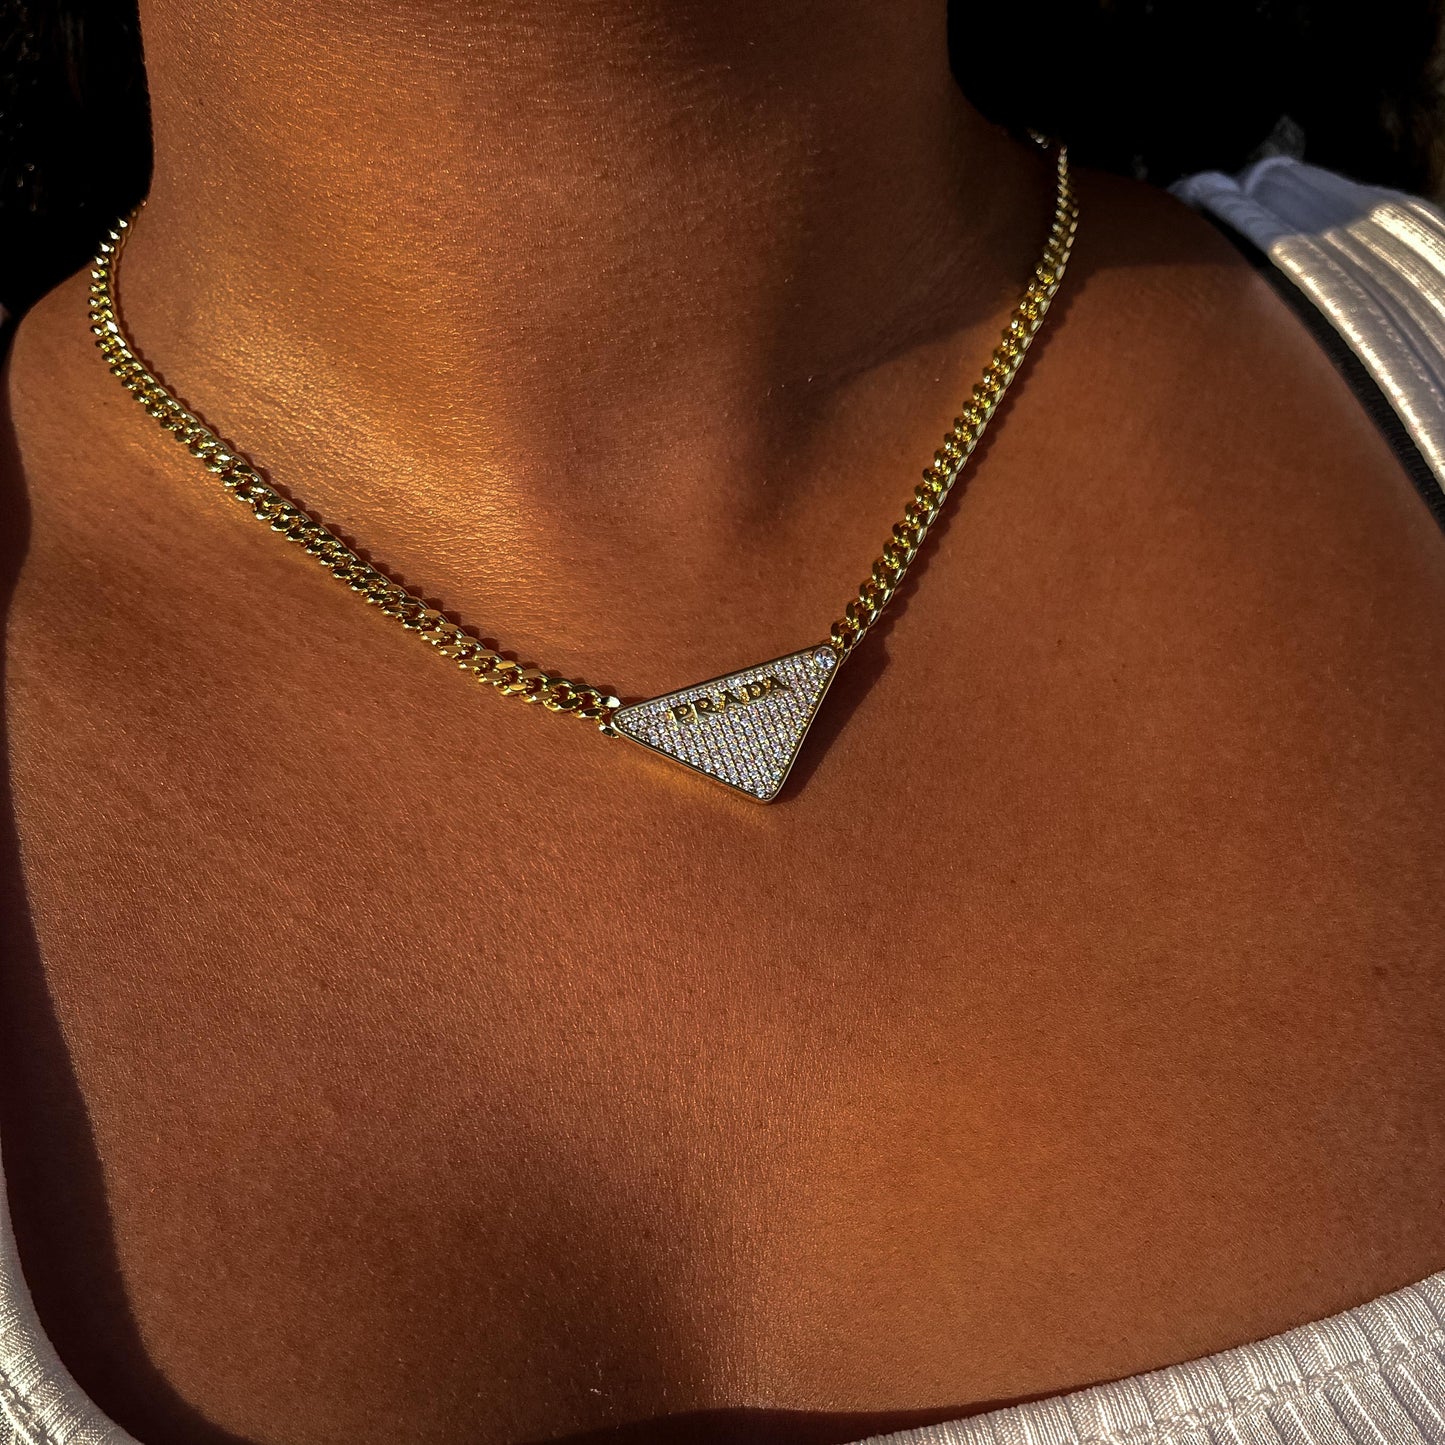 Radiant Trifecta necklace